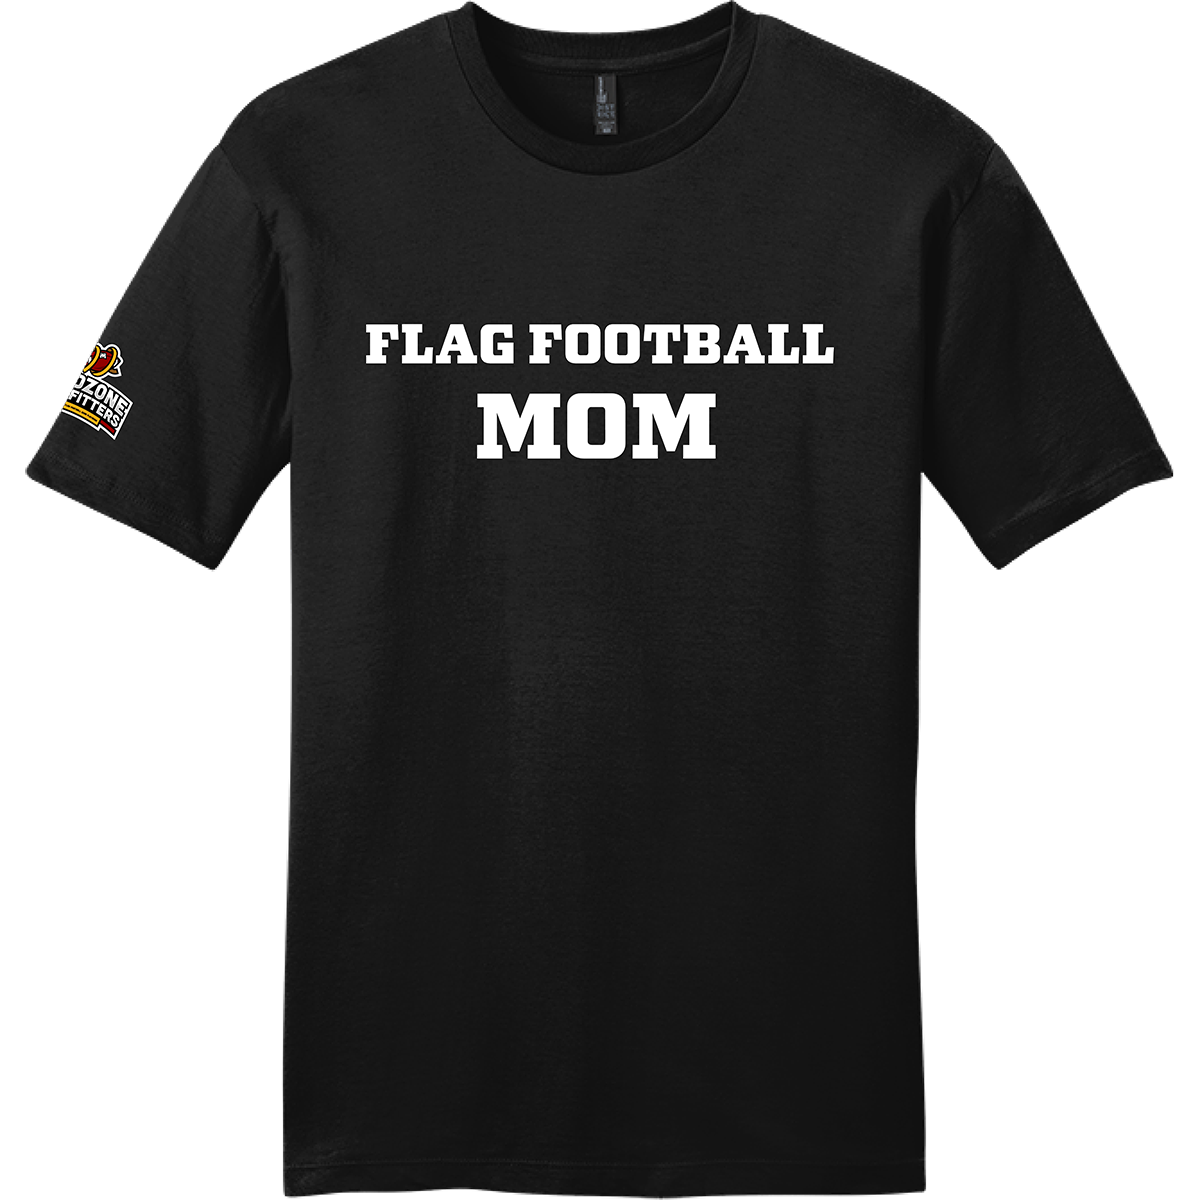 Flag Football Mom - Short Sleeve Shirt